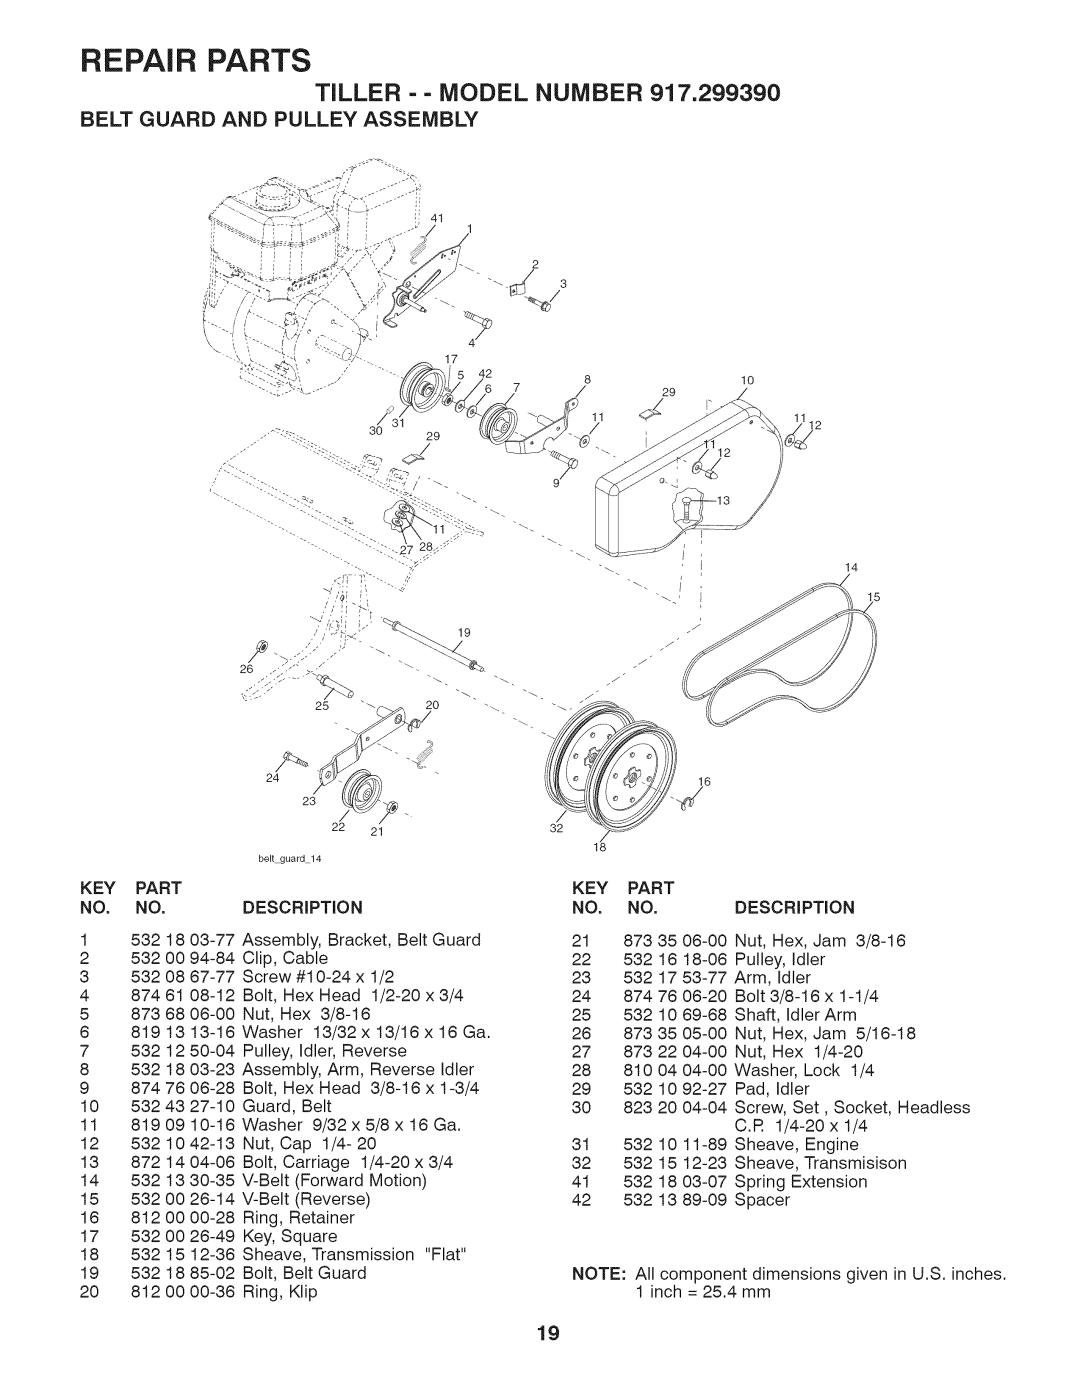 Husqvarna 917.29939 owner manual Belt Guard And Pulley Assembly, Repair Parts, Tiller - - Model Number 